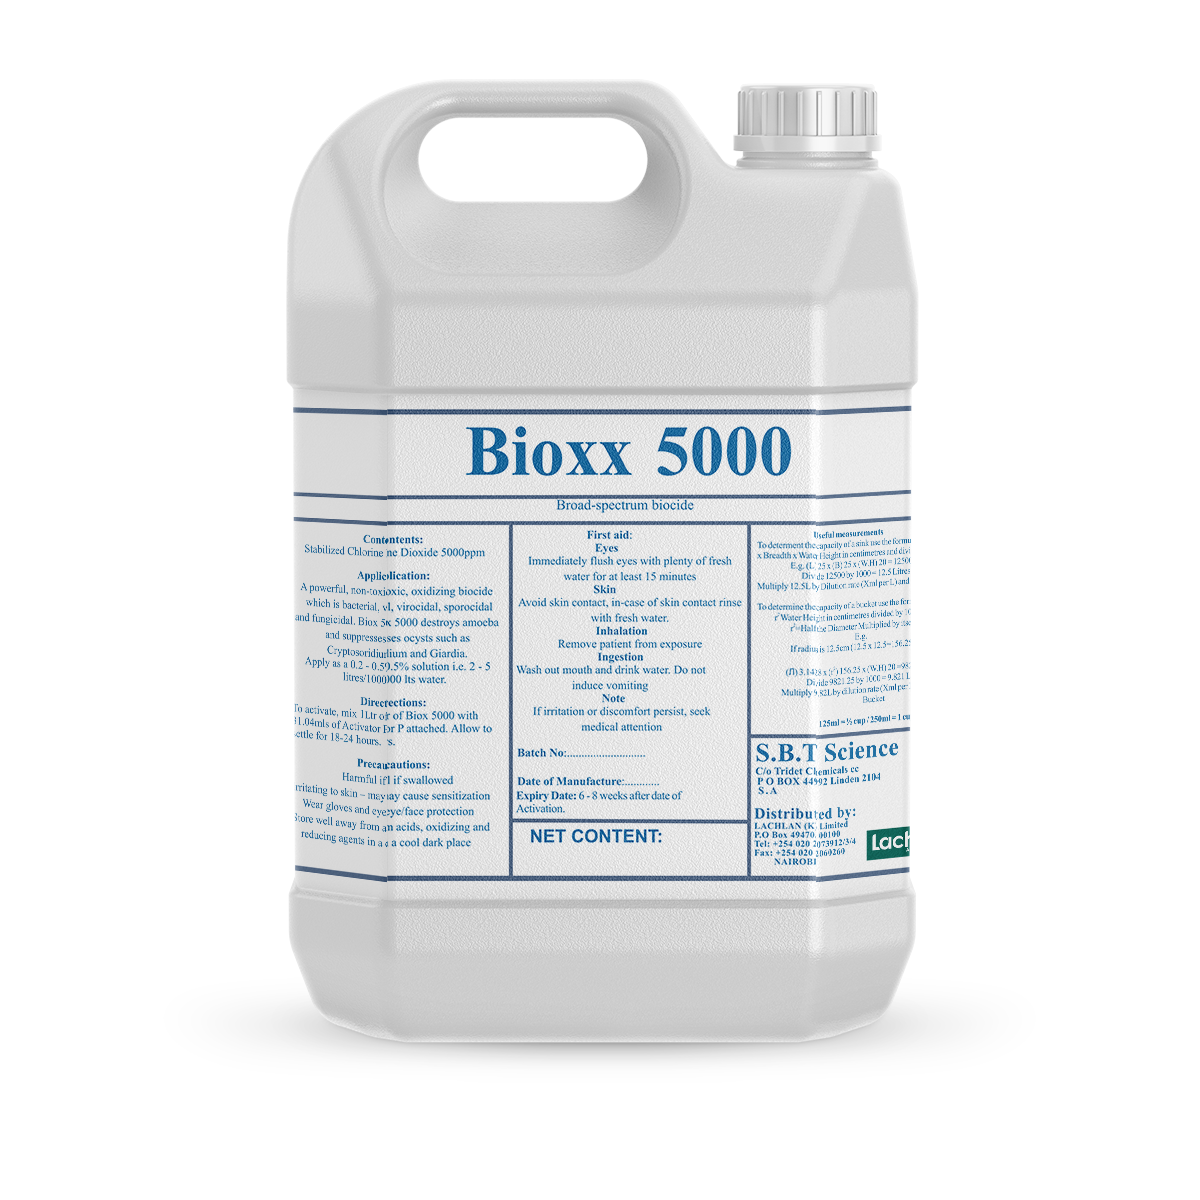 Bioxx 5000 Lachlan